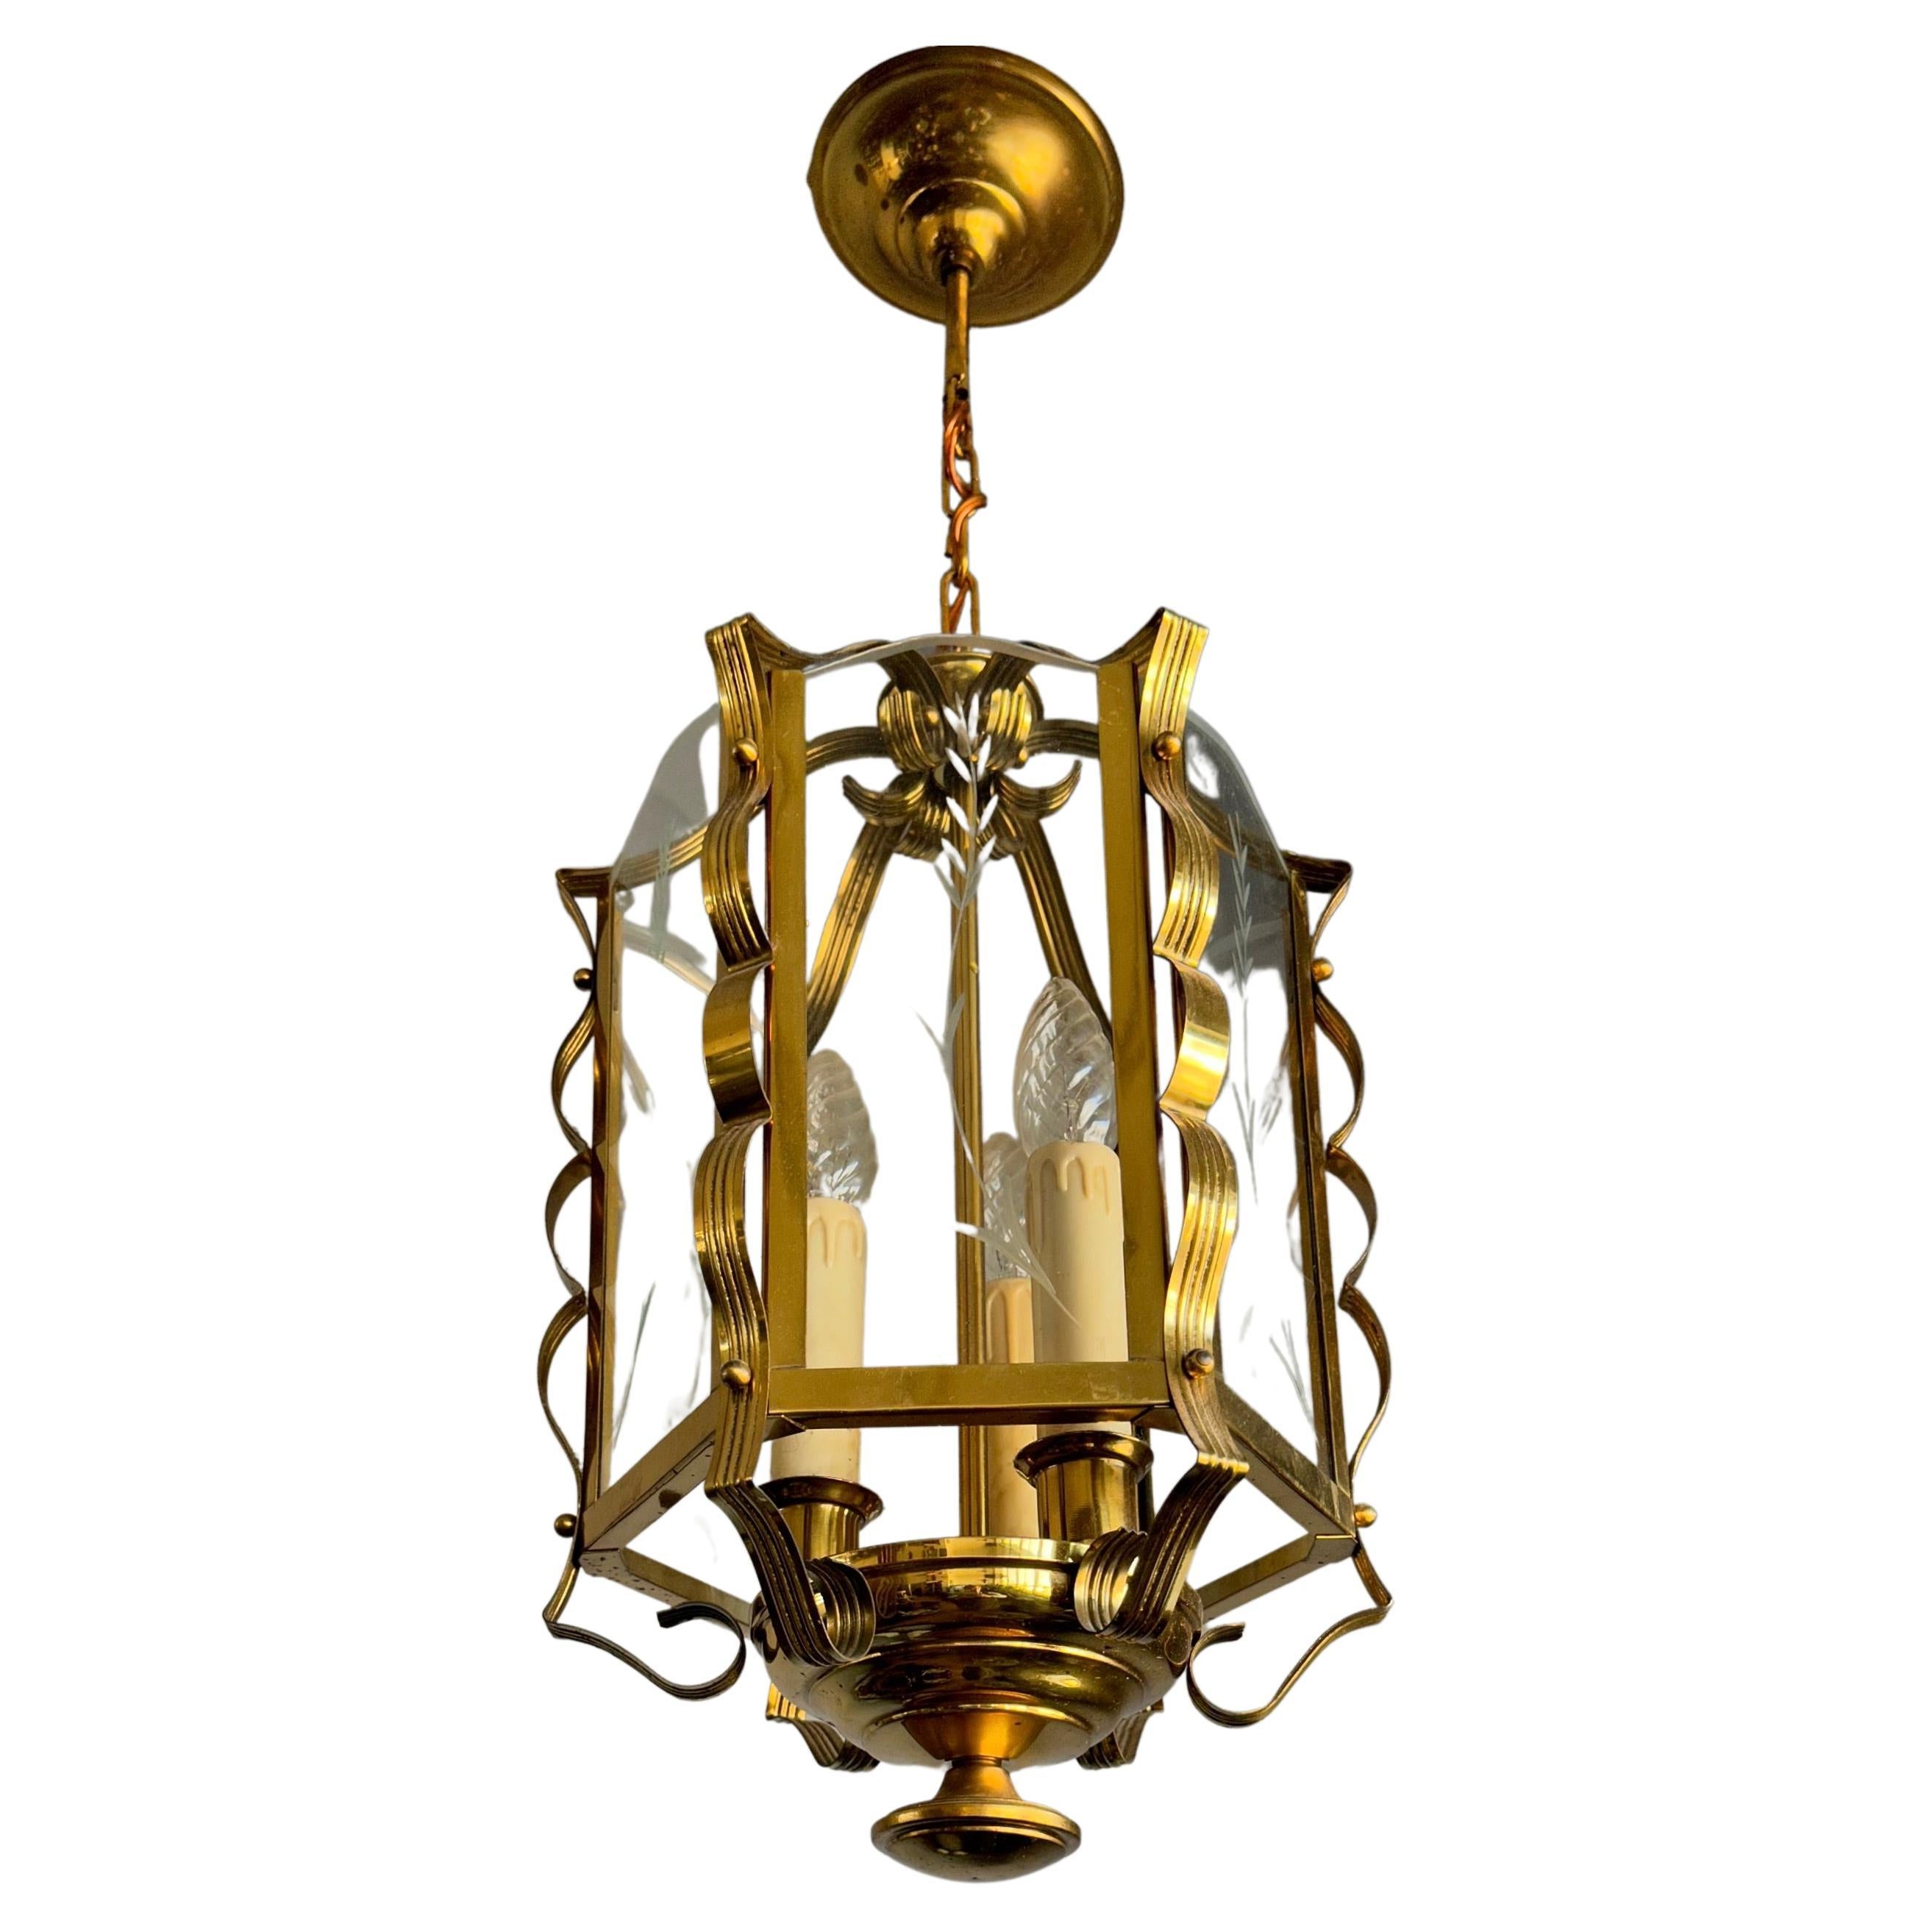 Stylish Design Arts & Crafts Brass, Engraved Glass Lantern Pendant Light Fixture